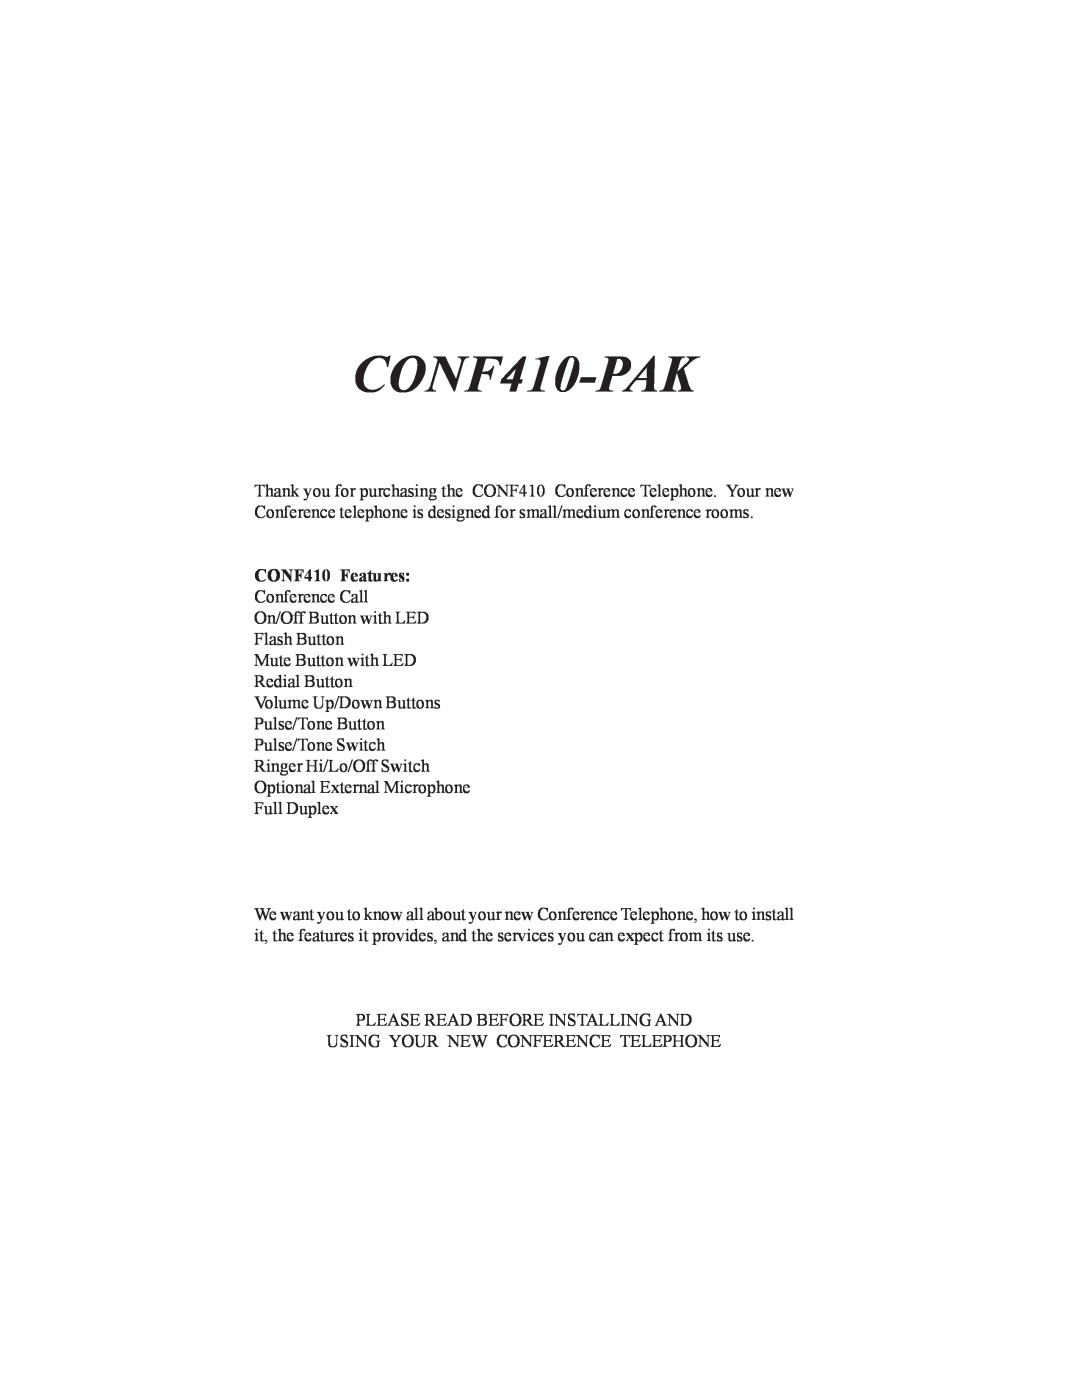 Cortelco CONF410PAK instruction manual CONF410 Features, CONF410-PAK 